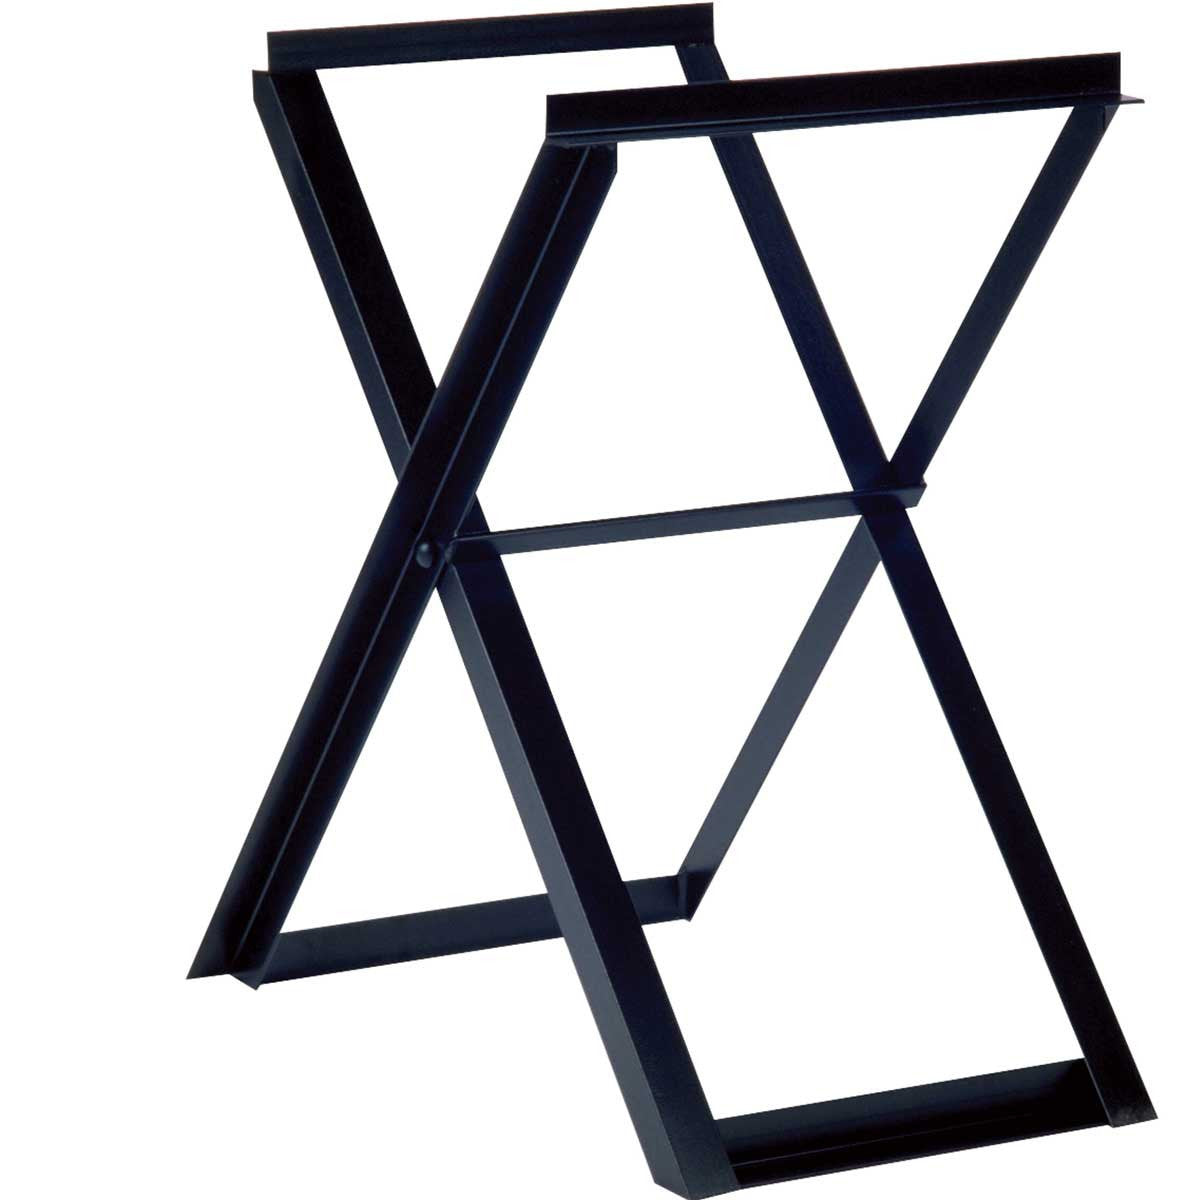 Husqvarna Tilematic Folding Steel Tile Saw Stand (7628670405)